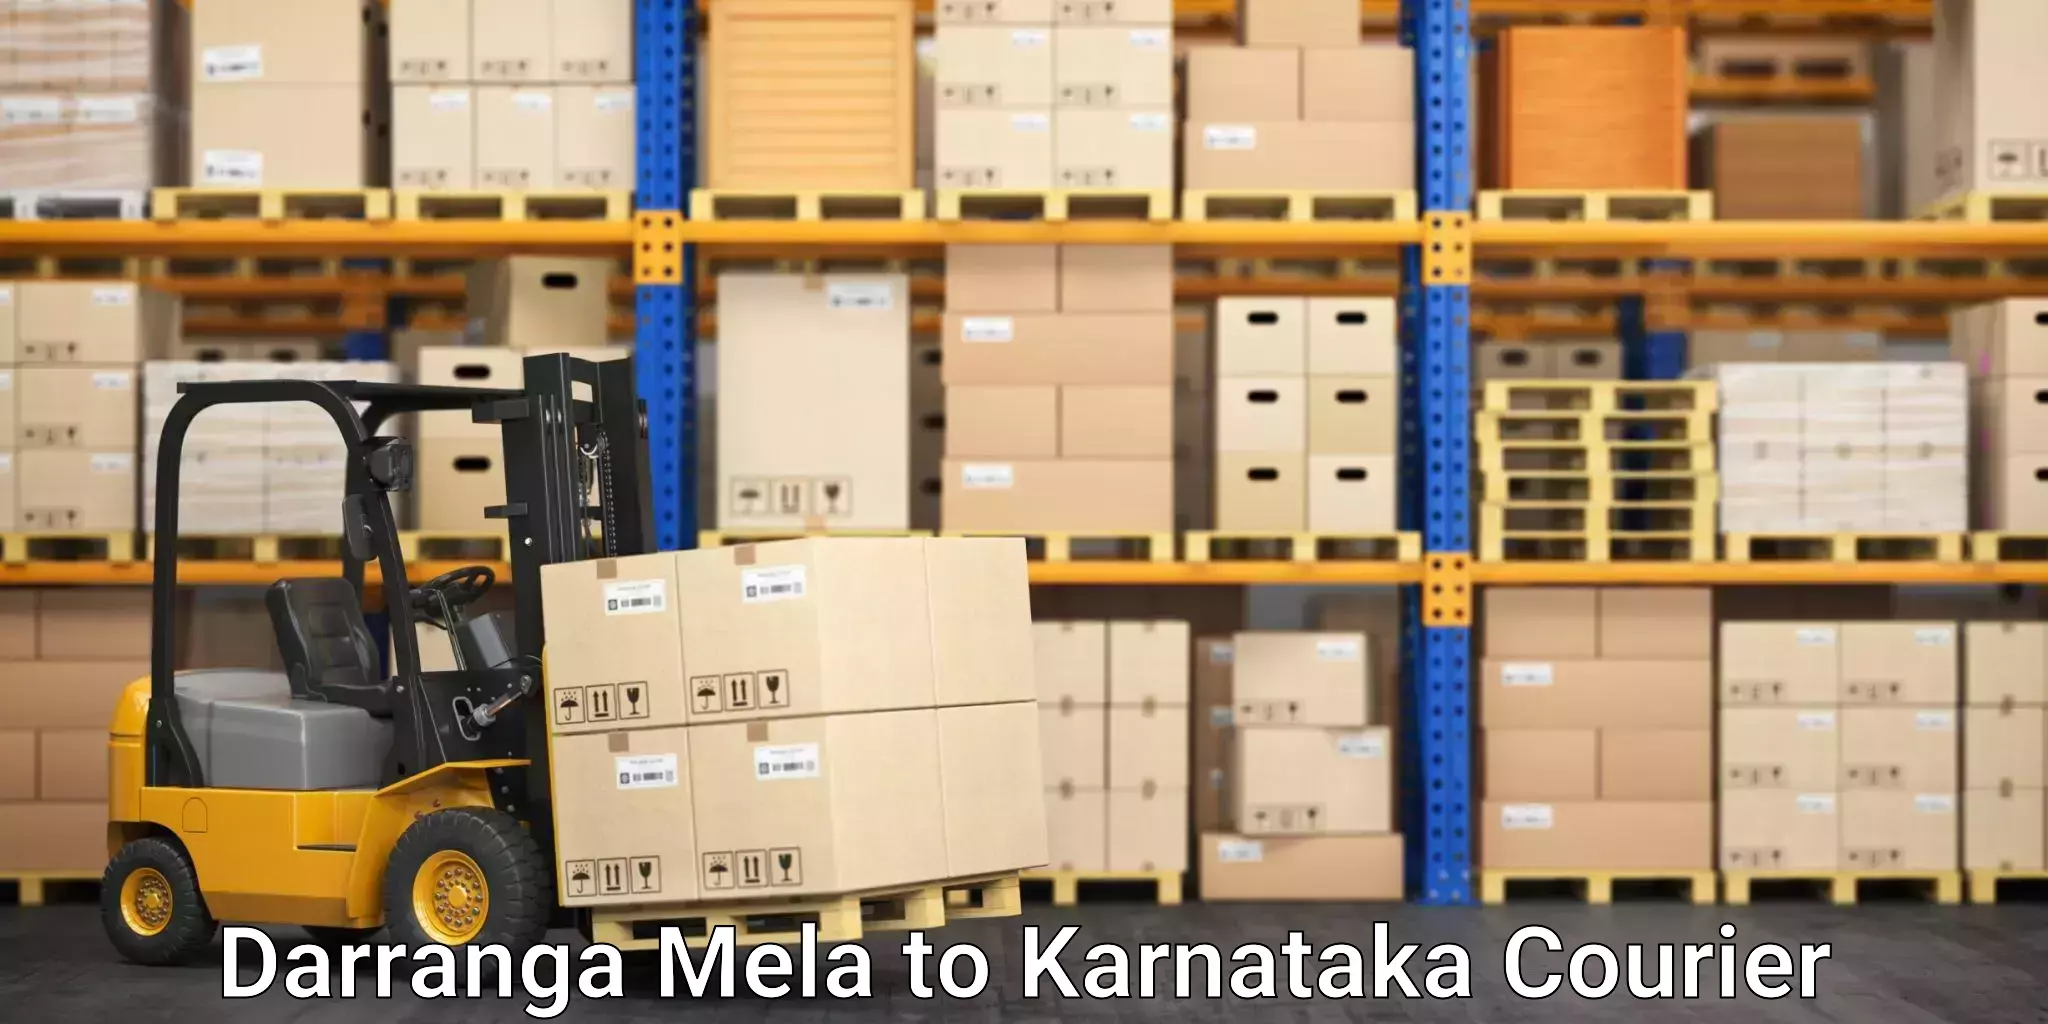 Reliable freight solutions Darranga Mela to Deodurga